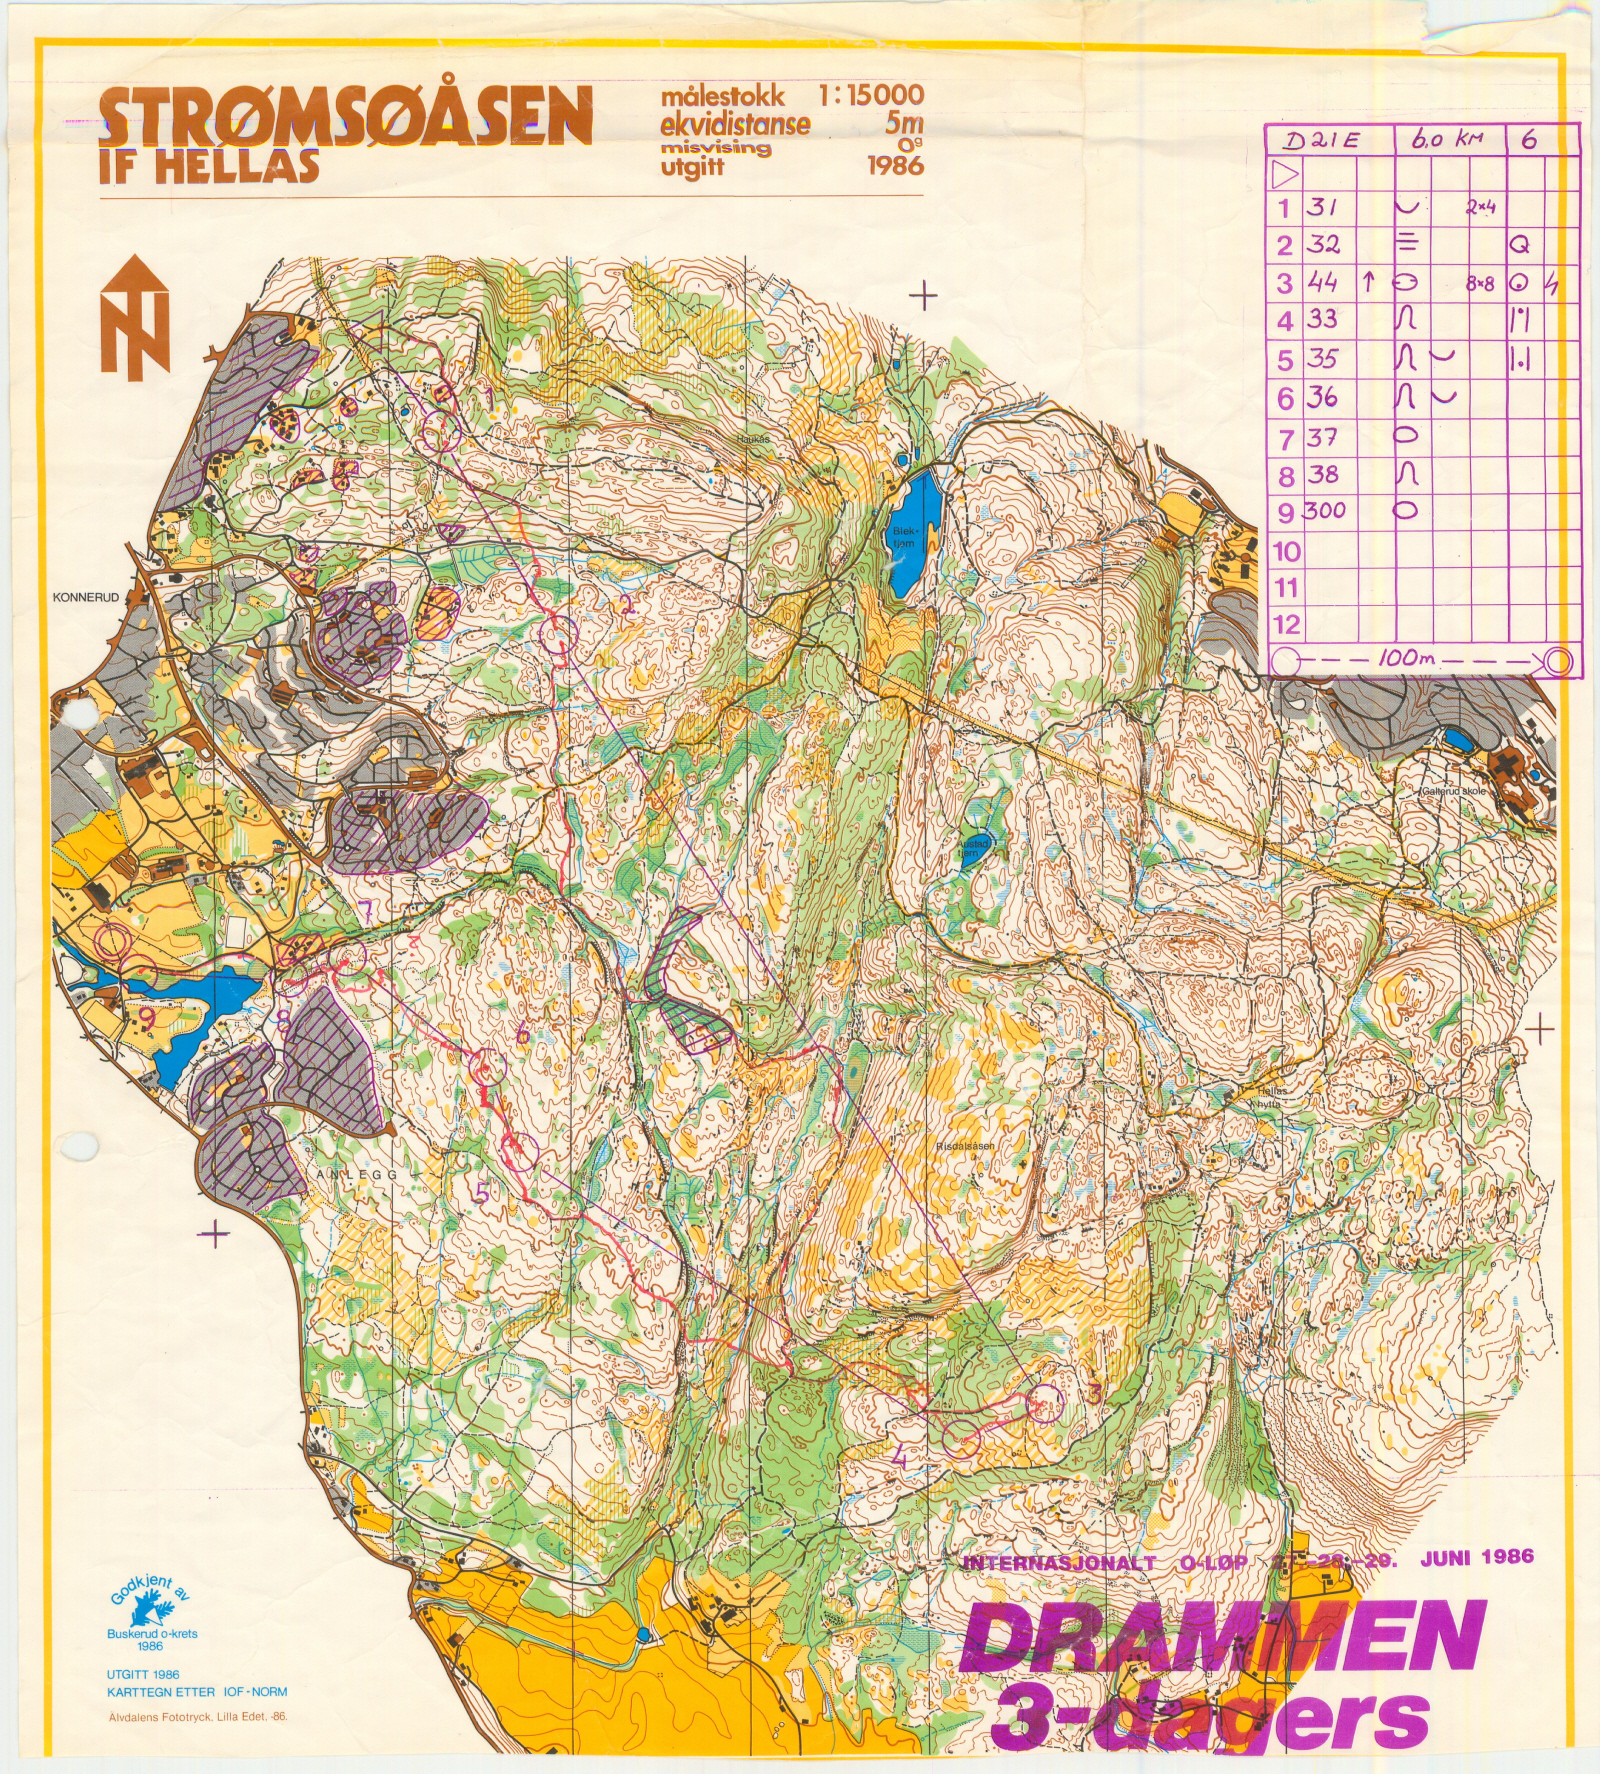 Drammen 3-dagers etappe 2 (1986-06-28)